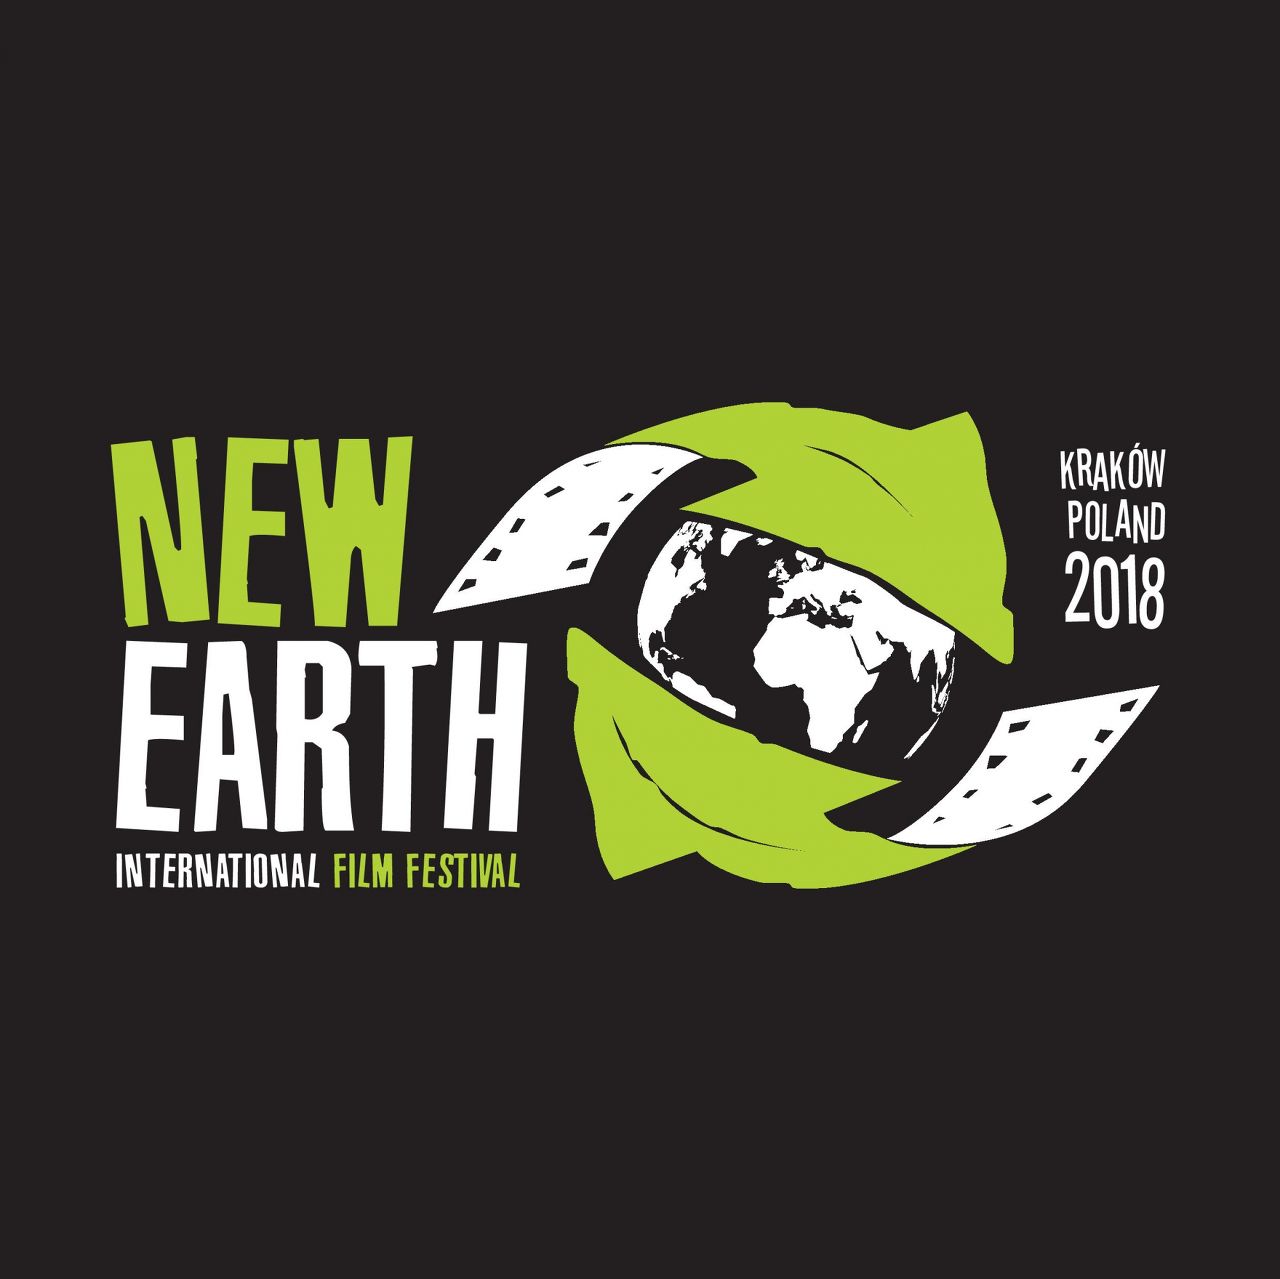 New Earth International Film Festival